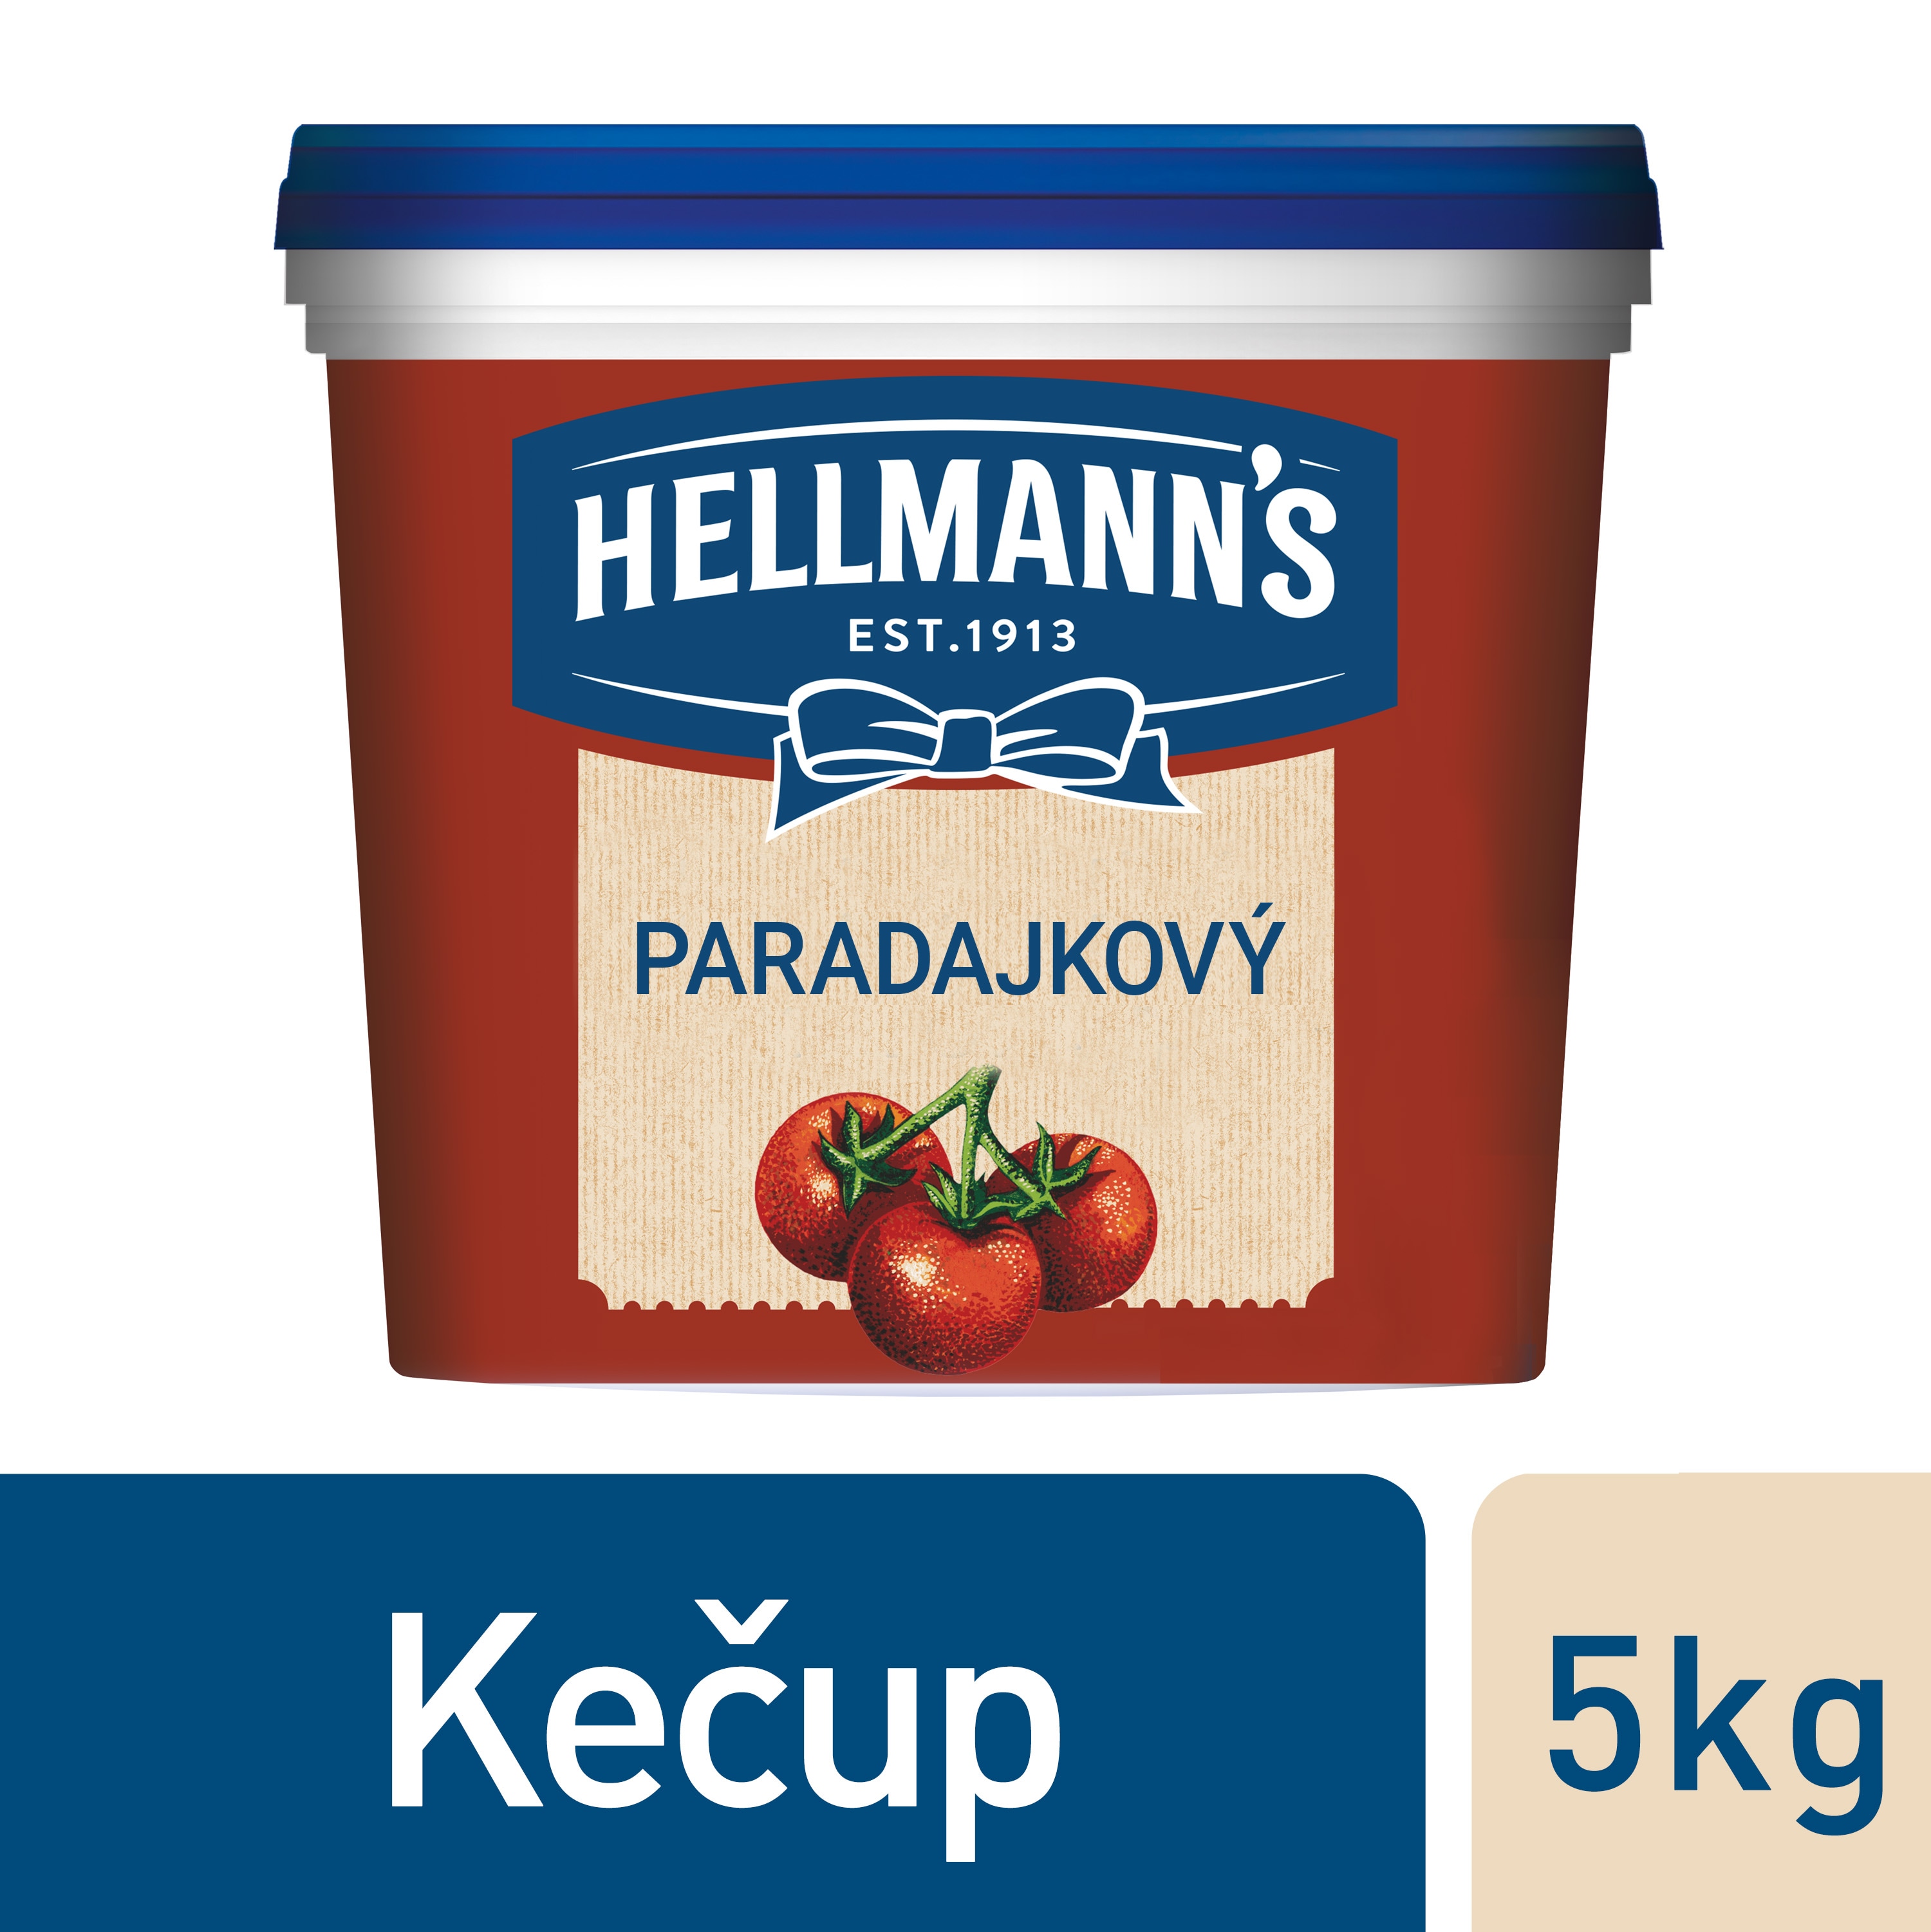 Hellmann's Kečup 5kg